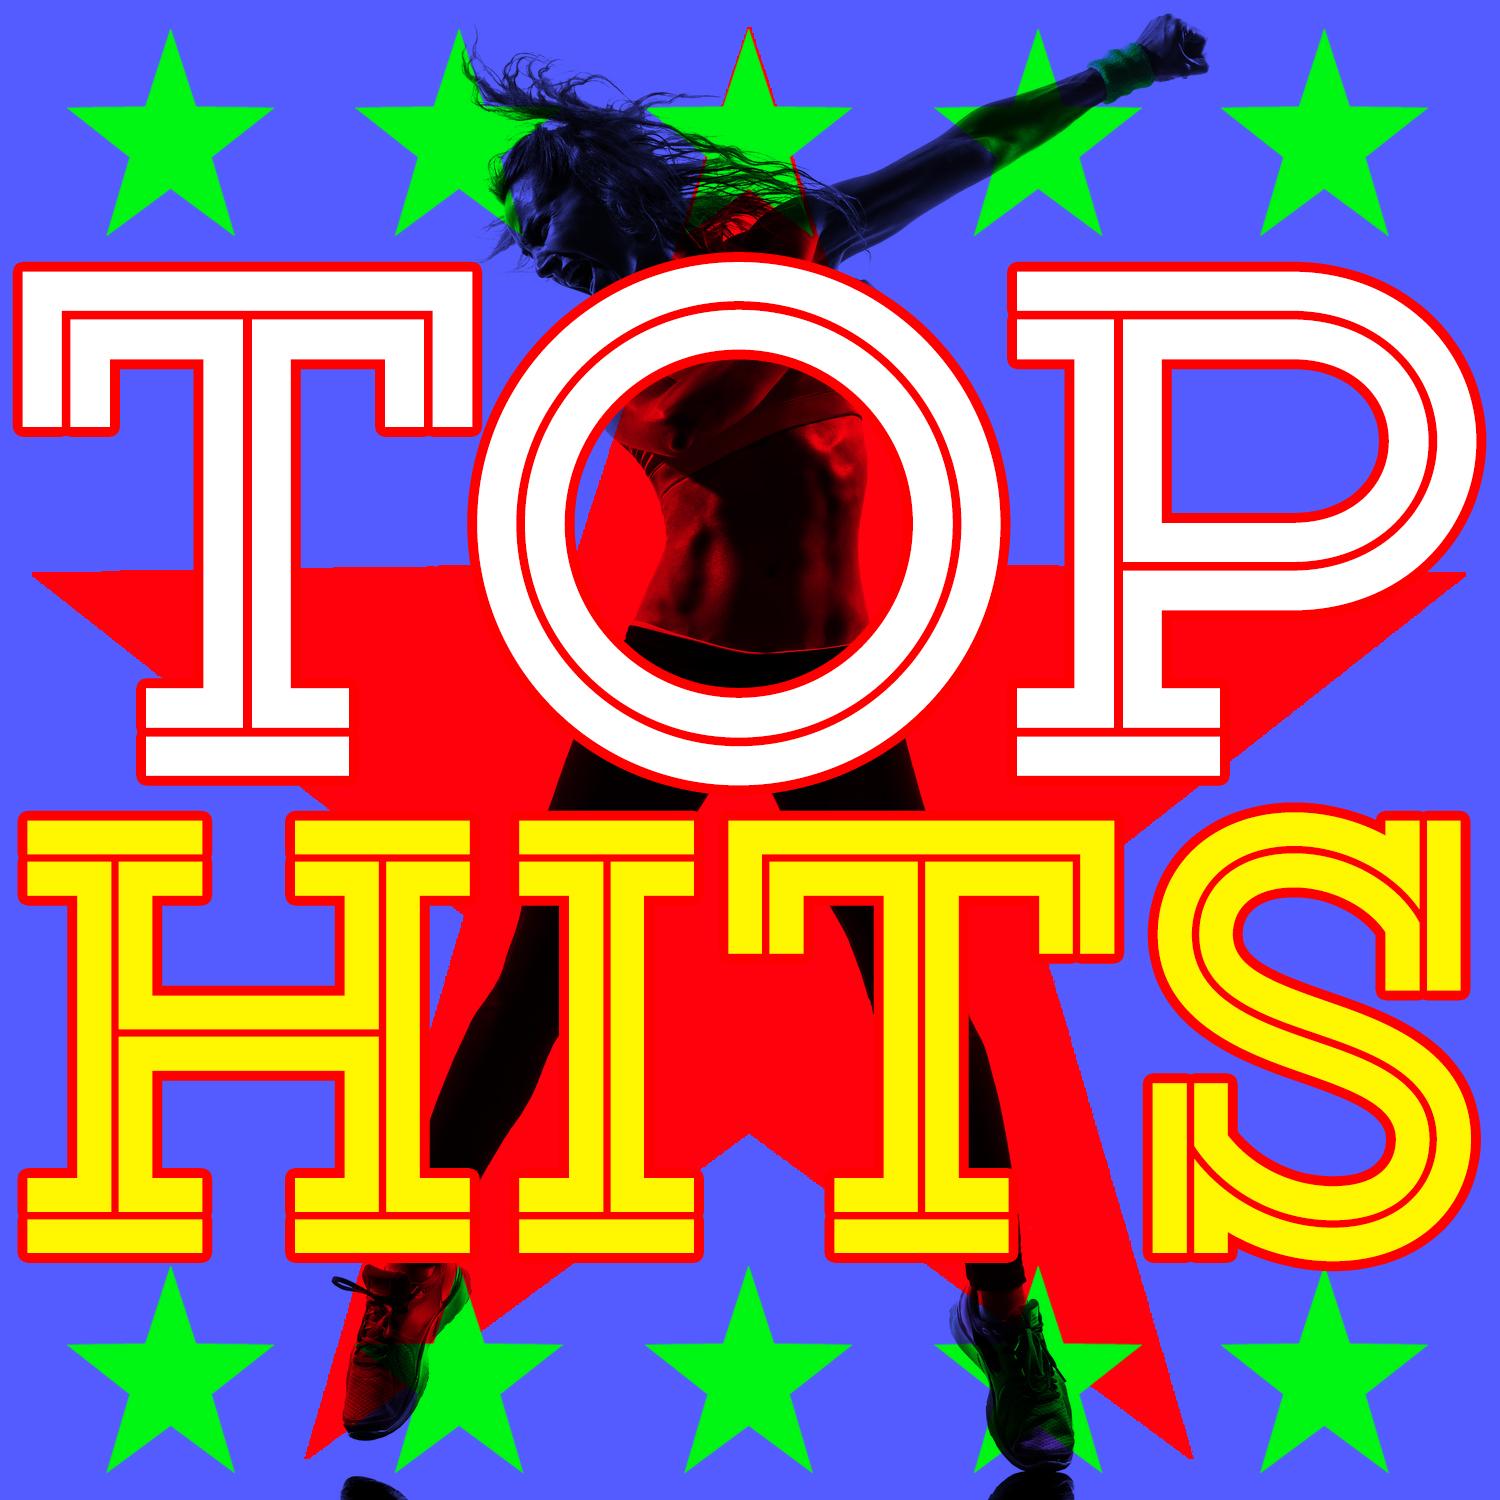 Top hits music. Hits обложка. Надпись Hit. Обложки нового хитового альбома. Music Hits logo.